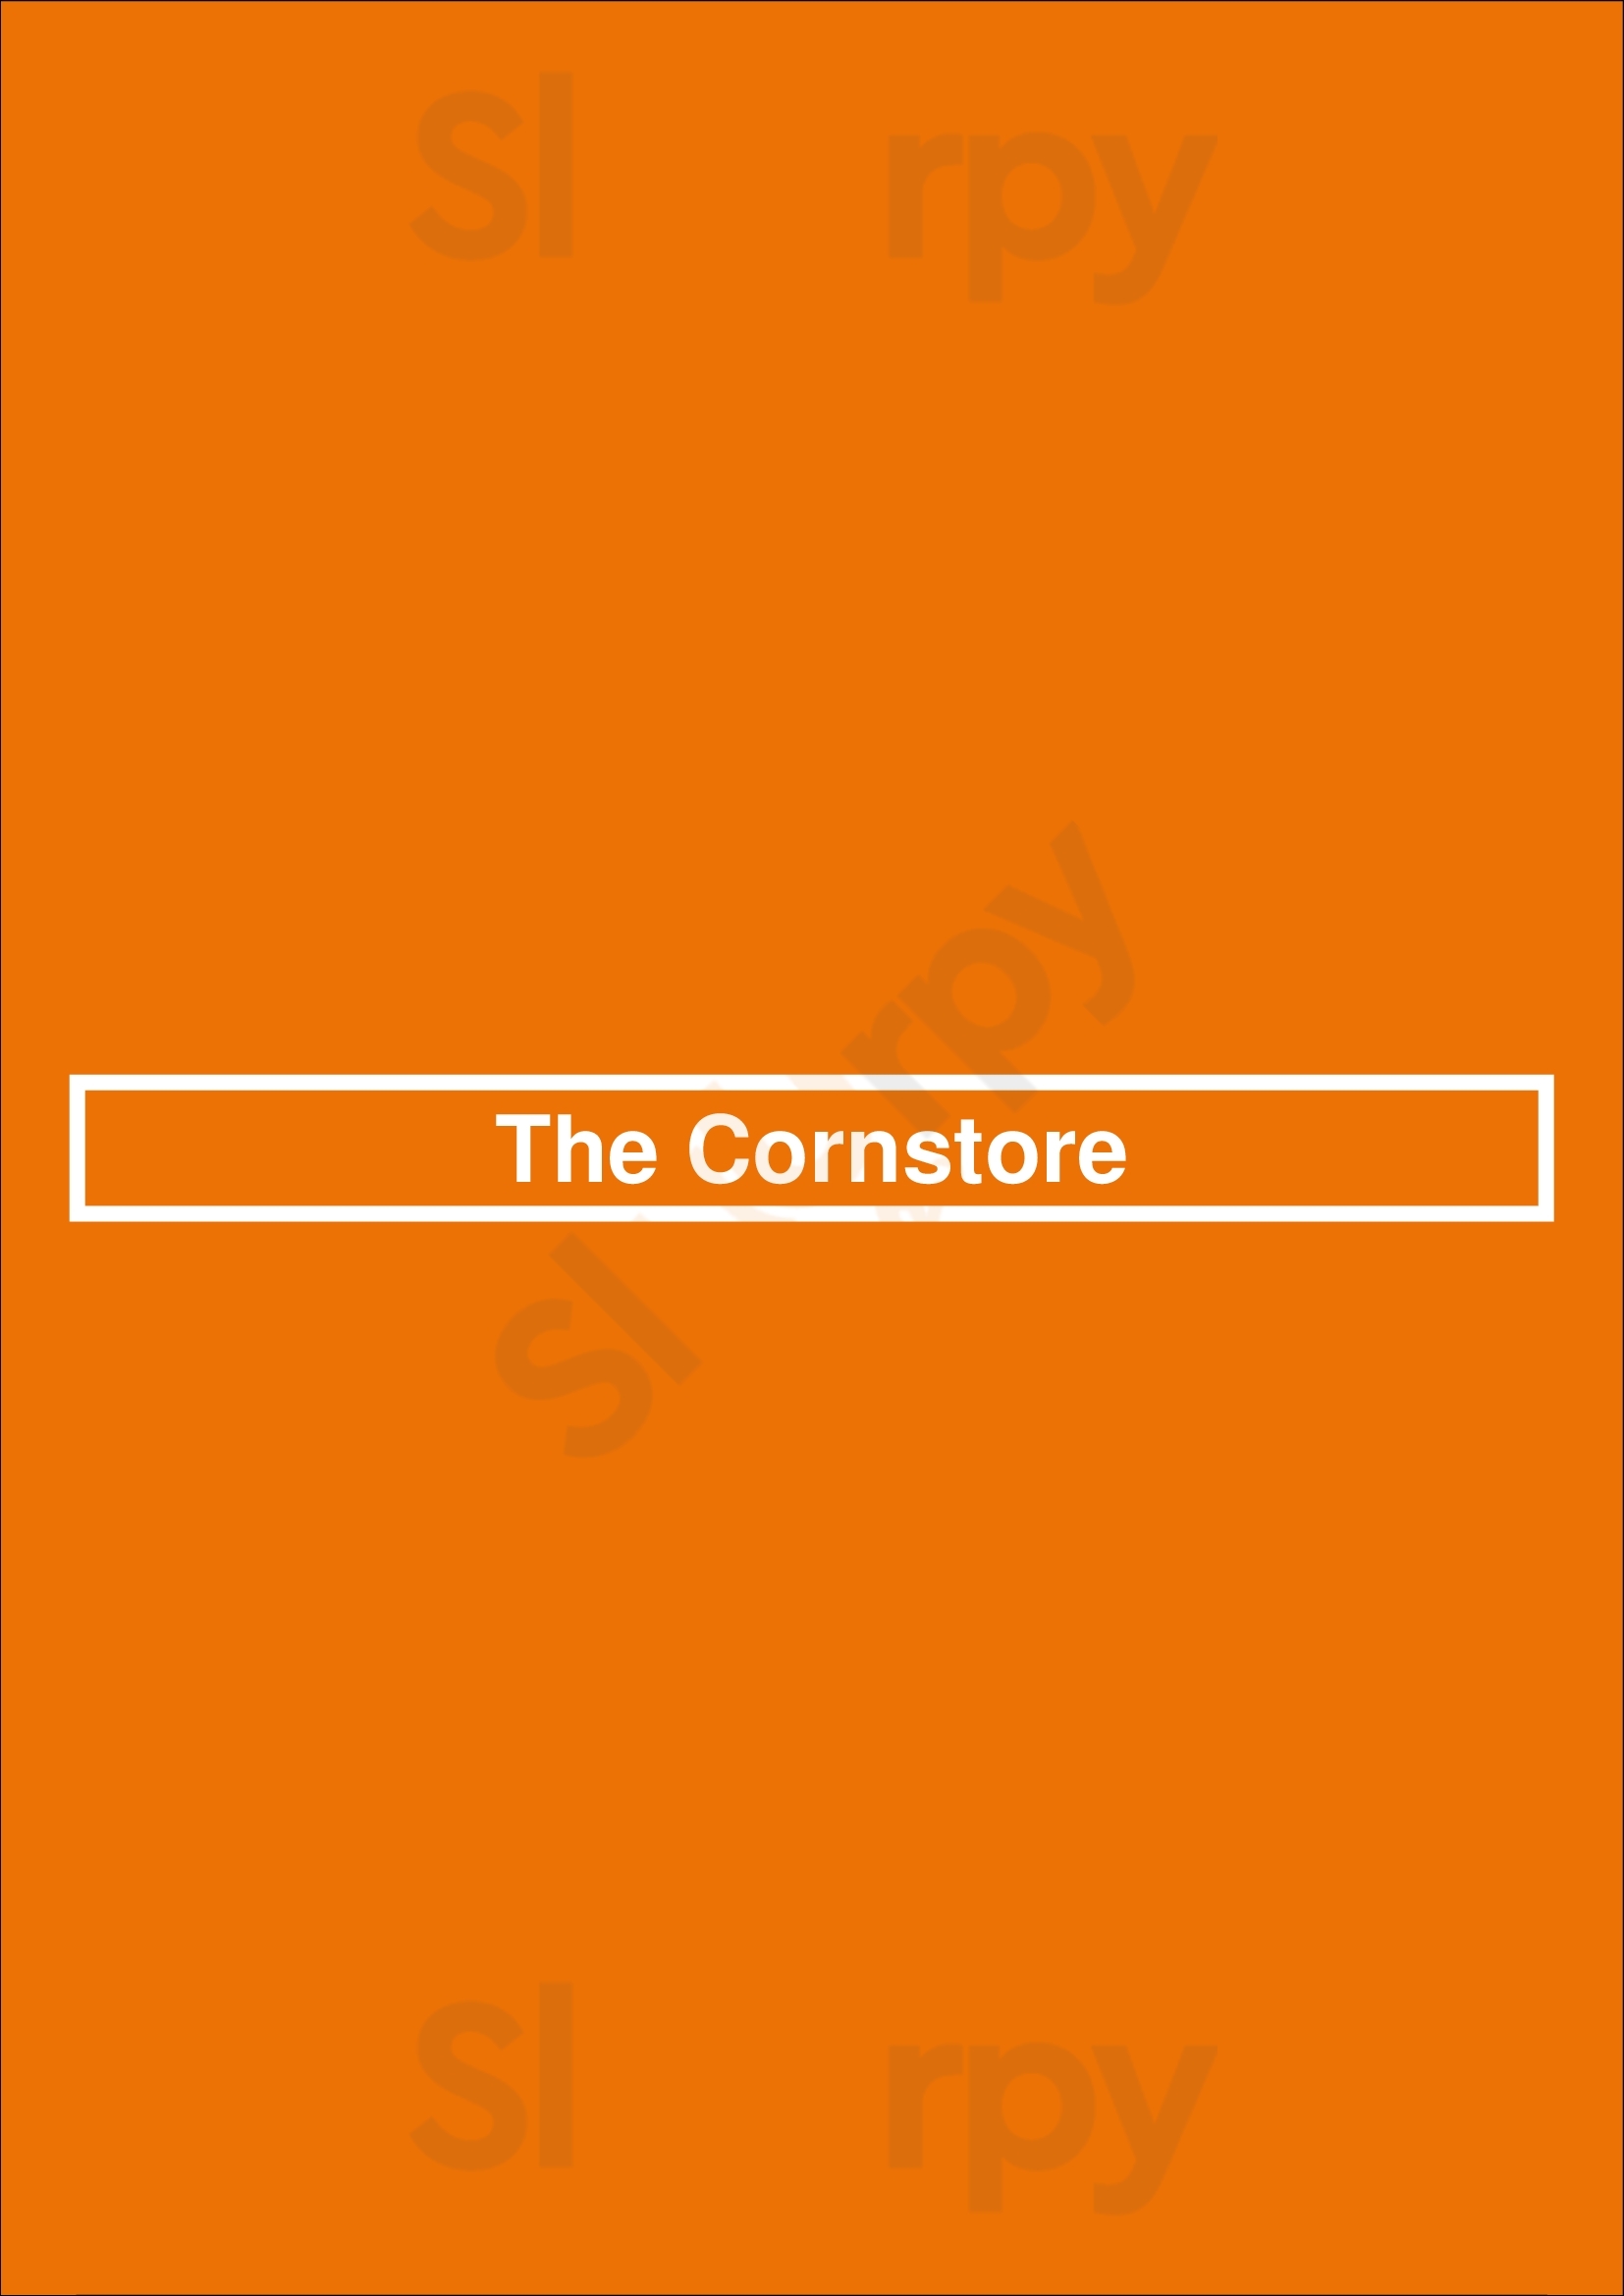 The Cornstore Limerick Menu - 1